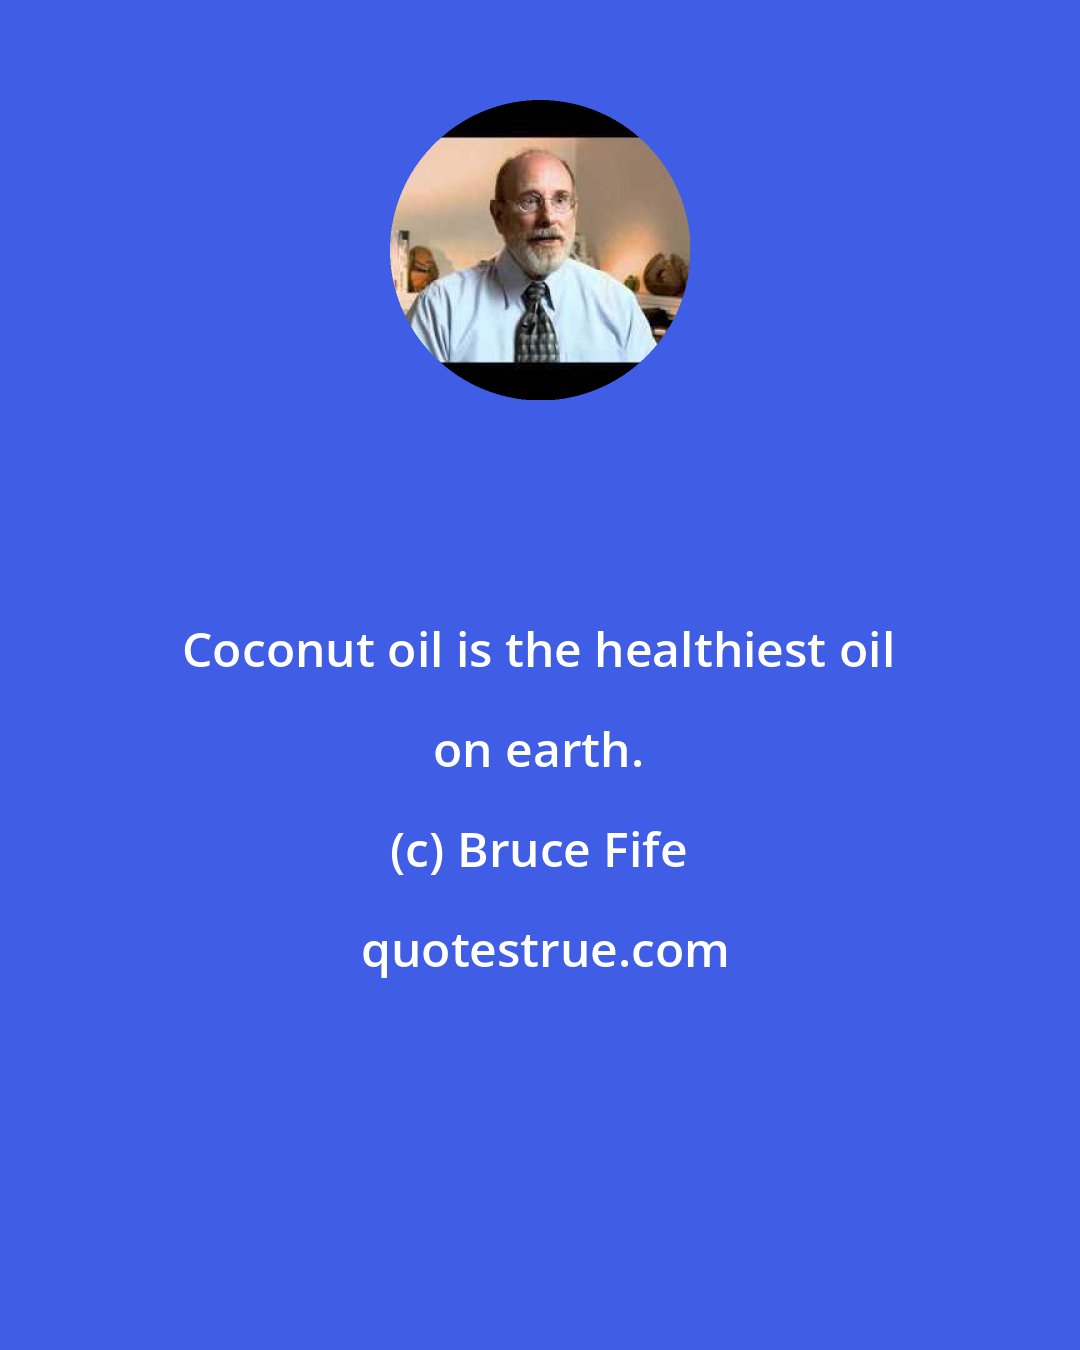 Bruce Fife: Coconut oil is the healthiest oil on earth.